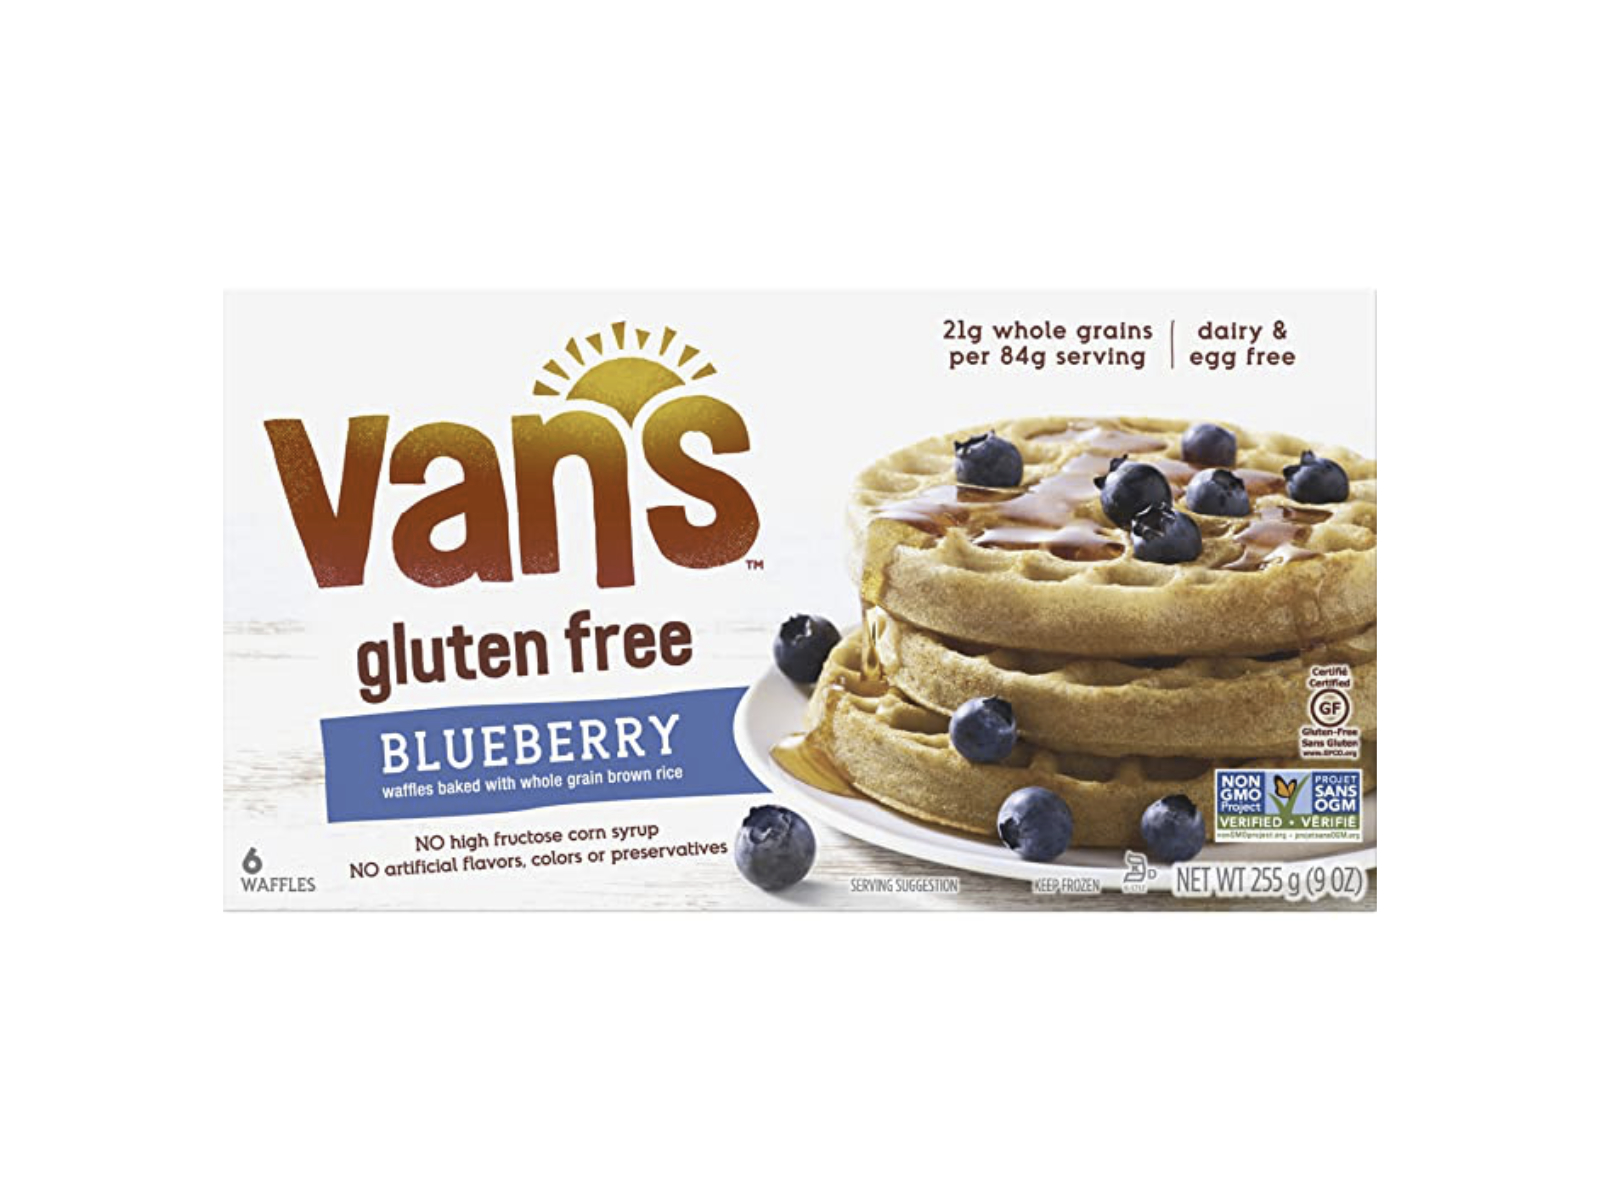 Van’s Gluten-Free Blueberry Waffles